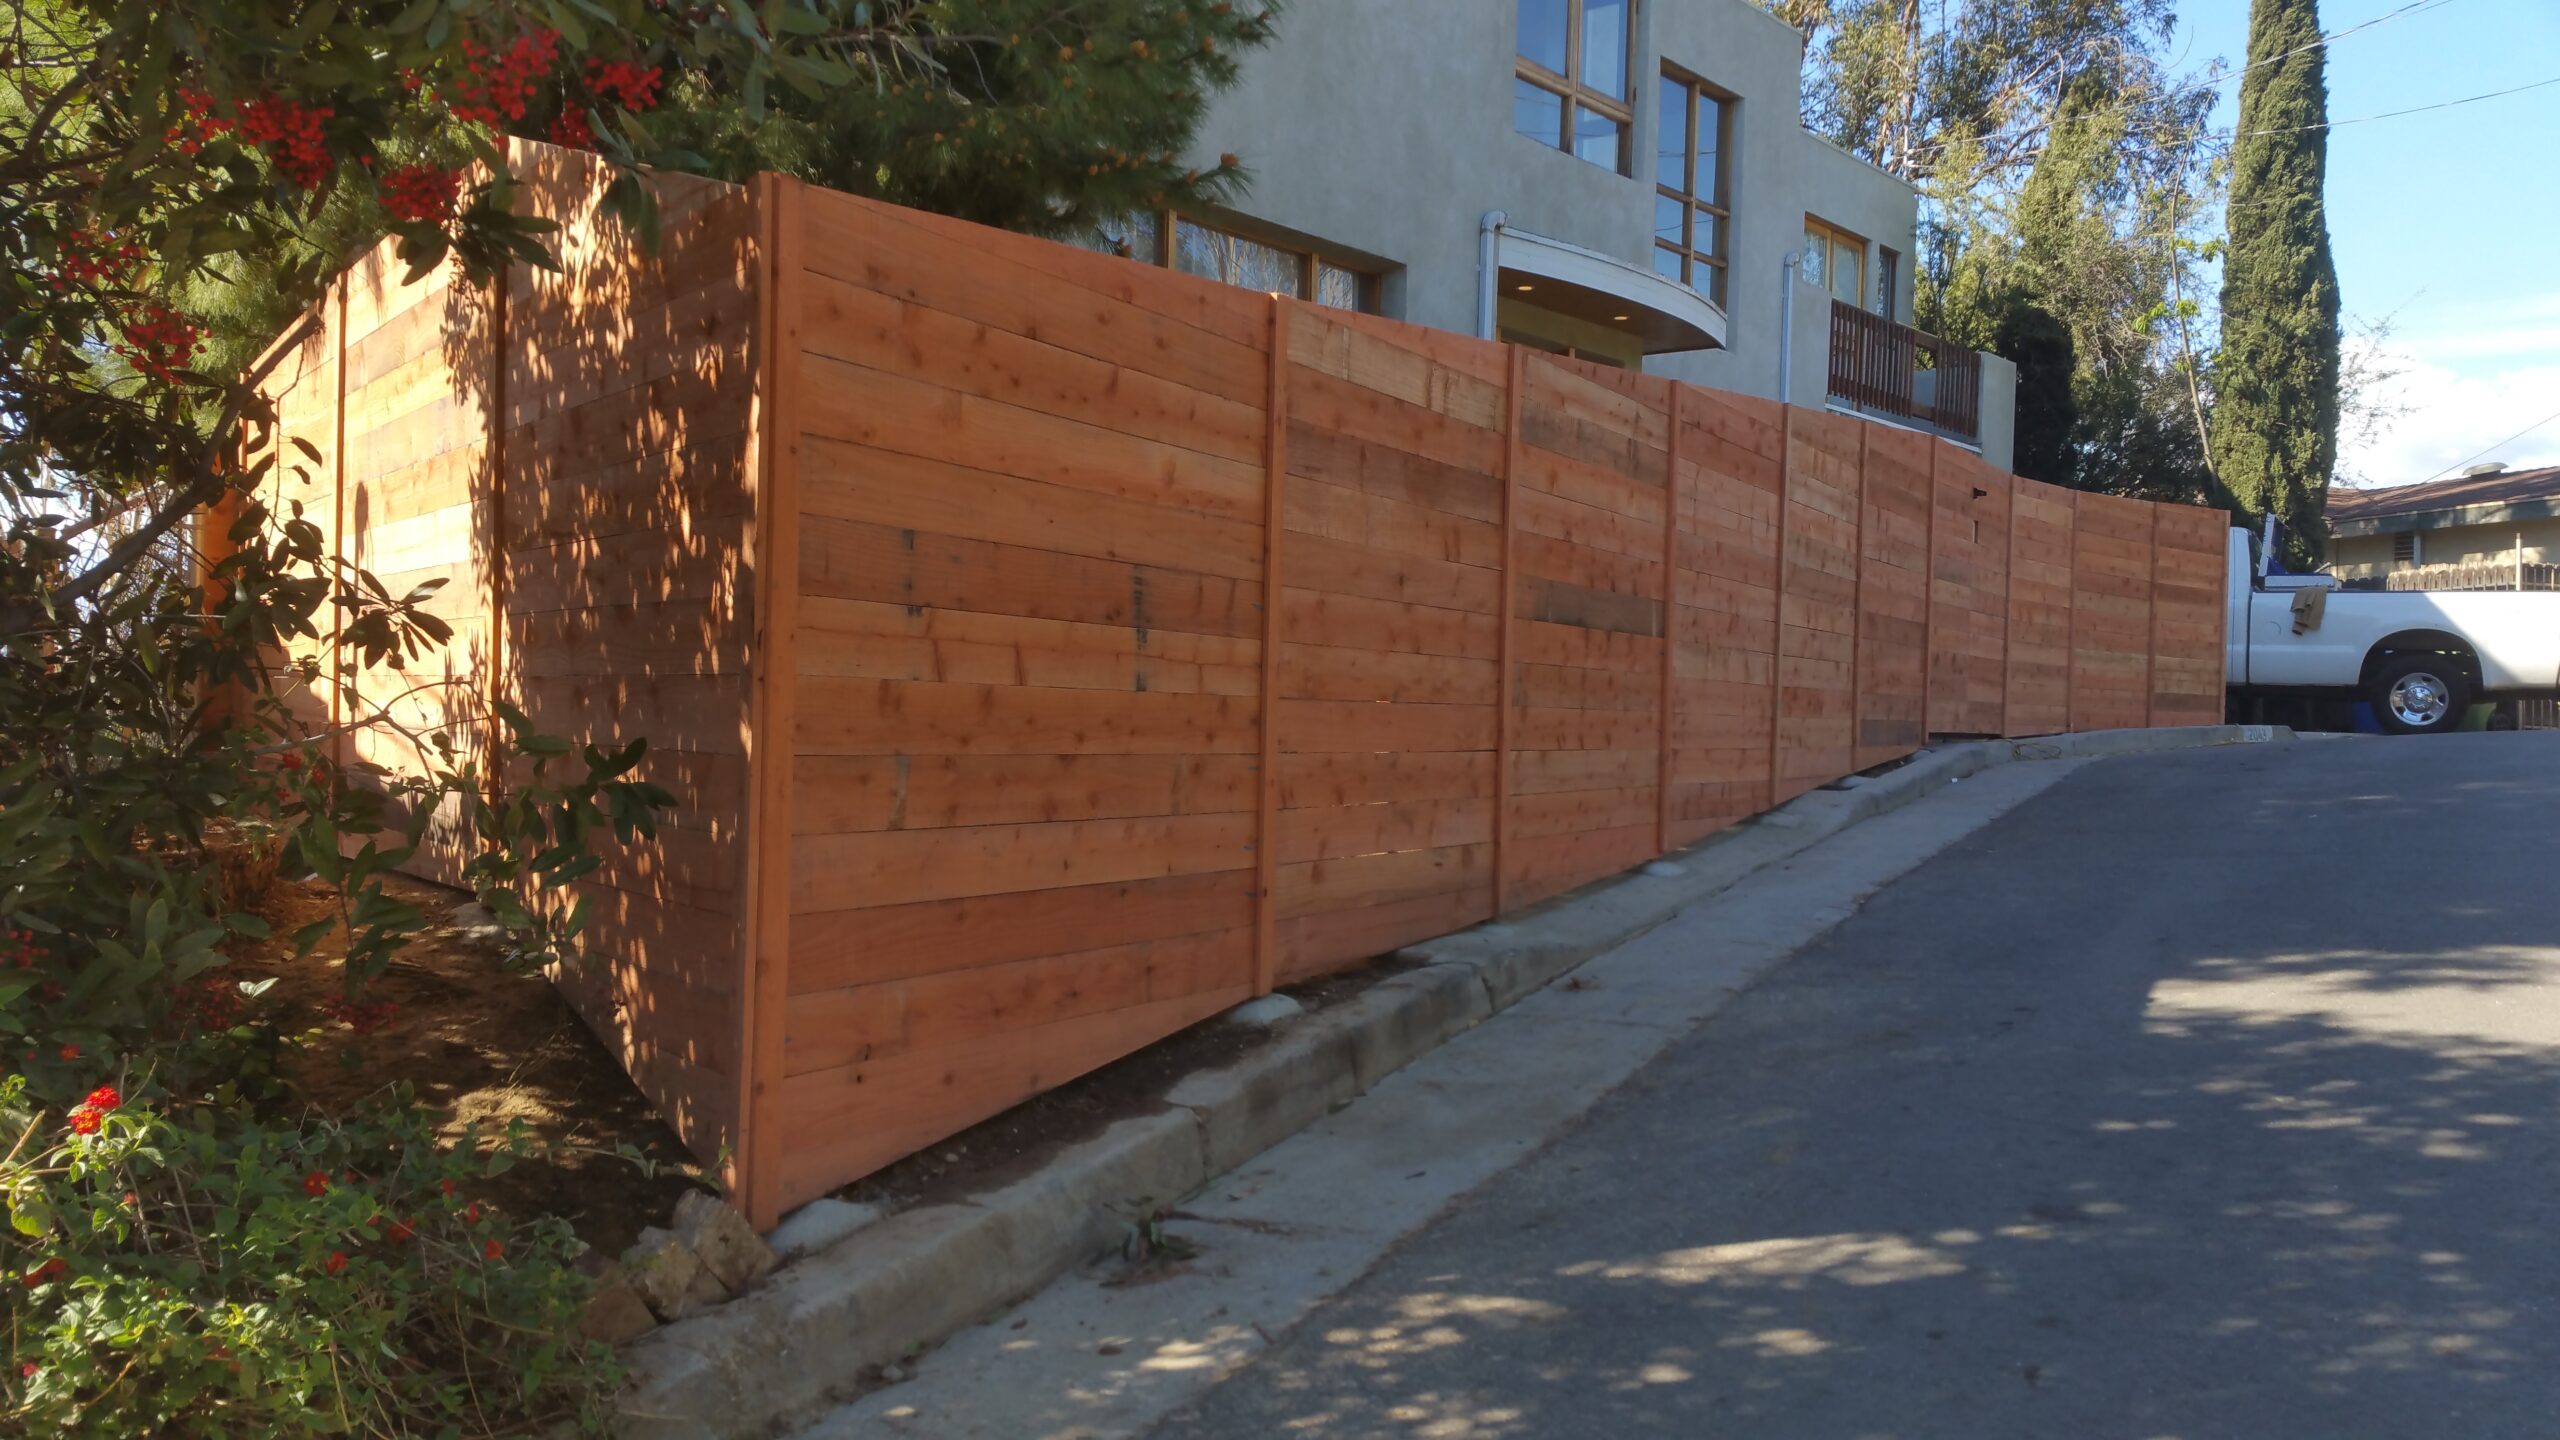 Custom, Modern Horizontal Front Yard Wood Fence + Matching Pedestrian Gates, Los Angeles hills 90026, designed & built by WoodFenceExpert.com